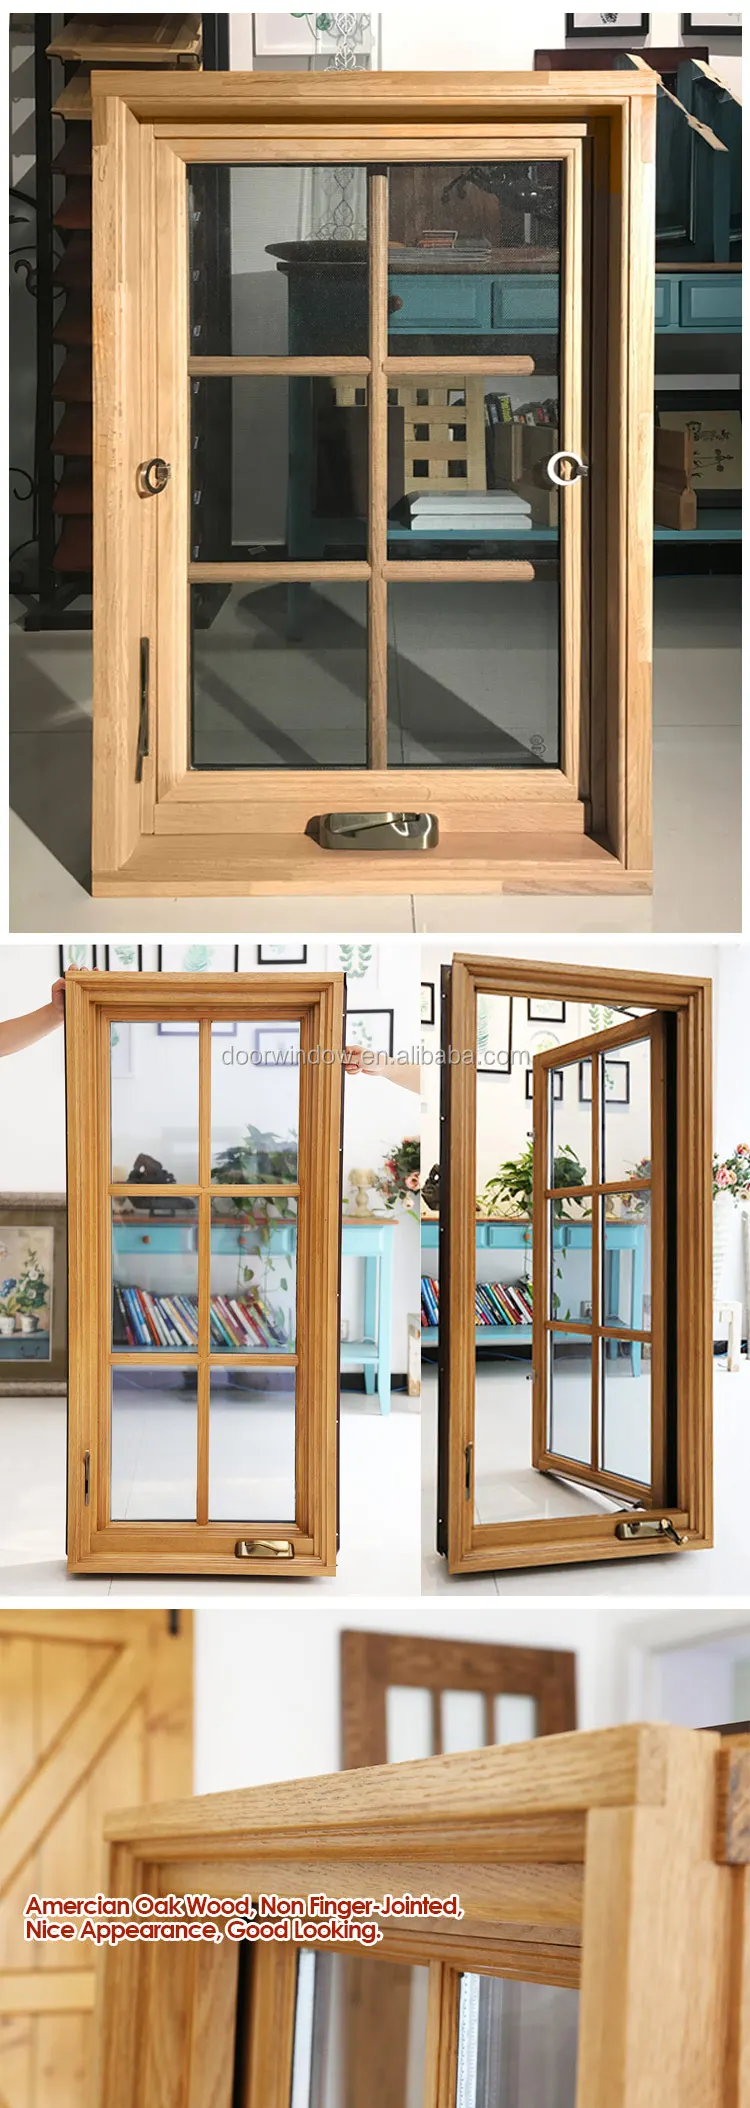 sound proof windows top sale Blind inside double glass window black crank casement windows